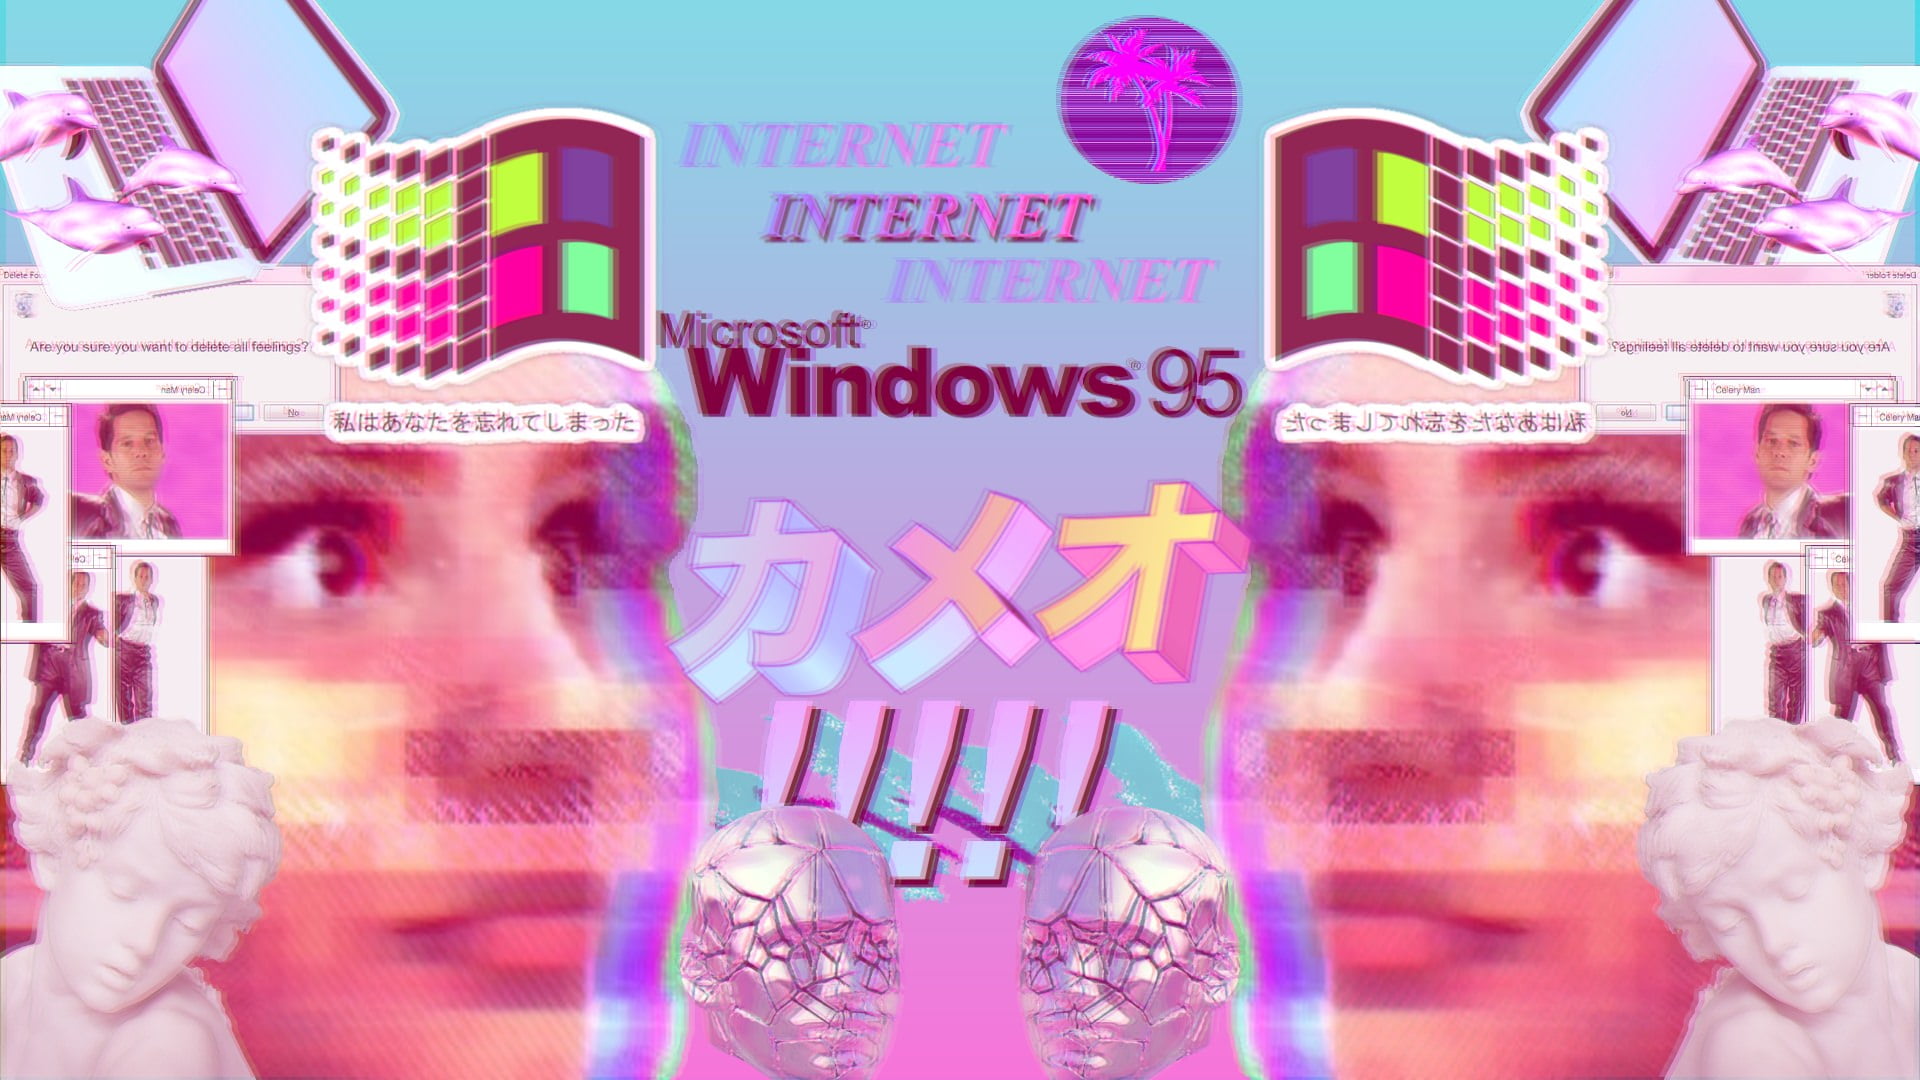 Microsoft Windows 95 text, Windows 95, glitch art, vaporwave